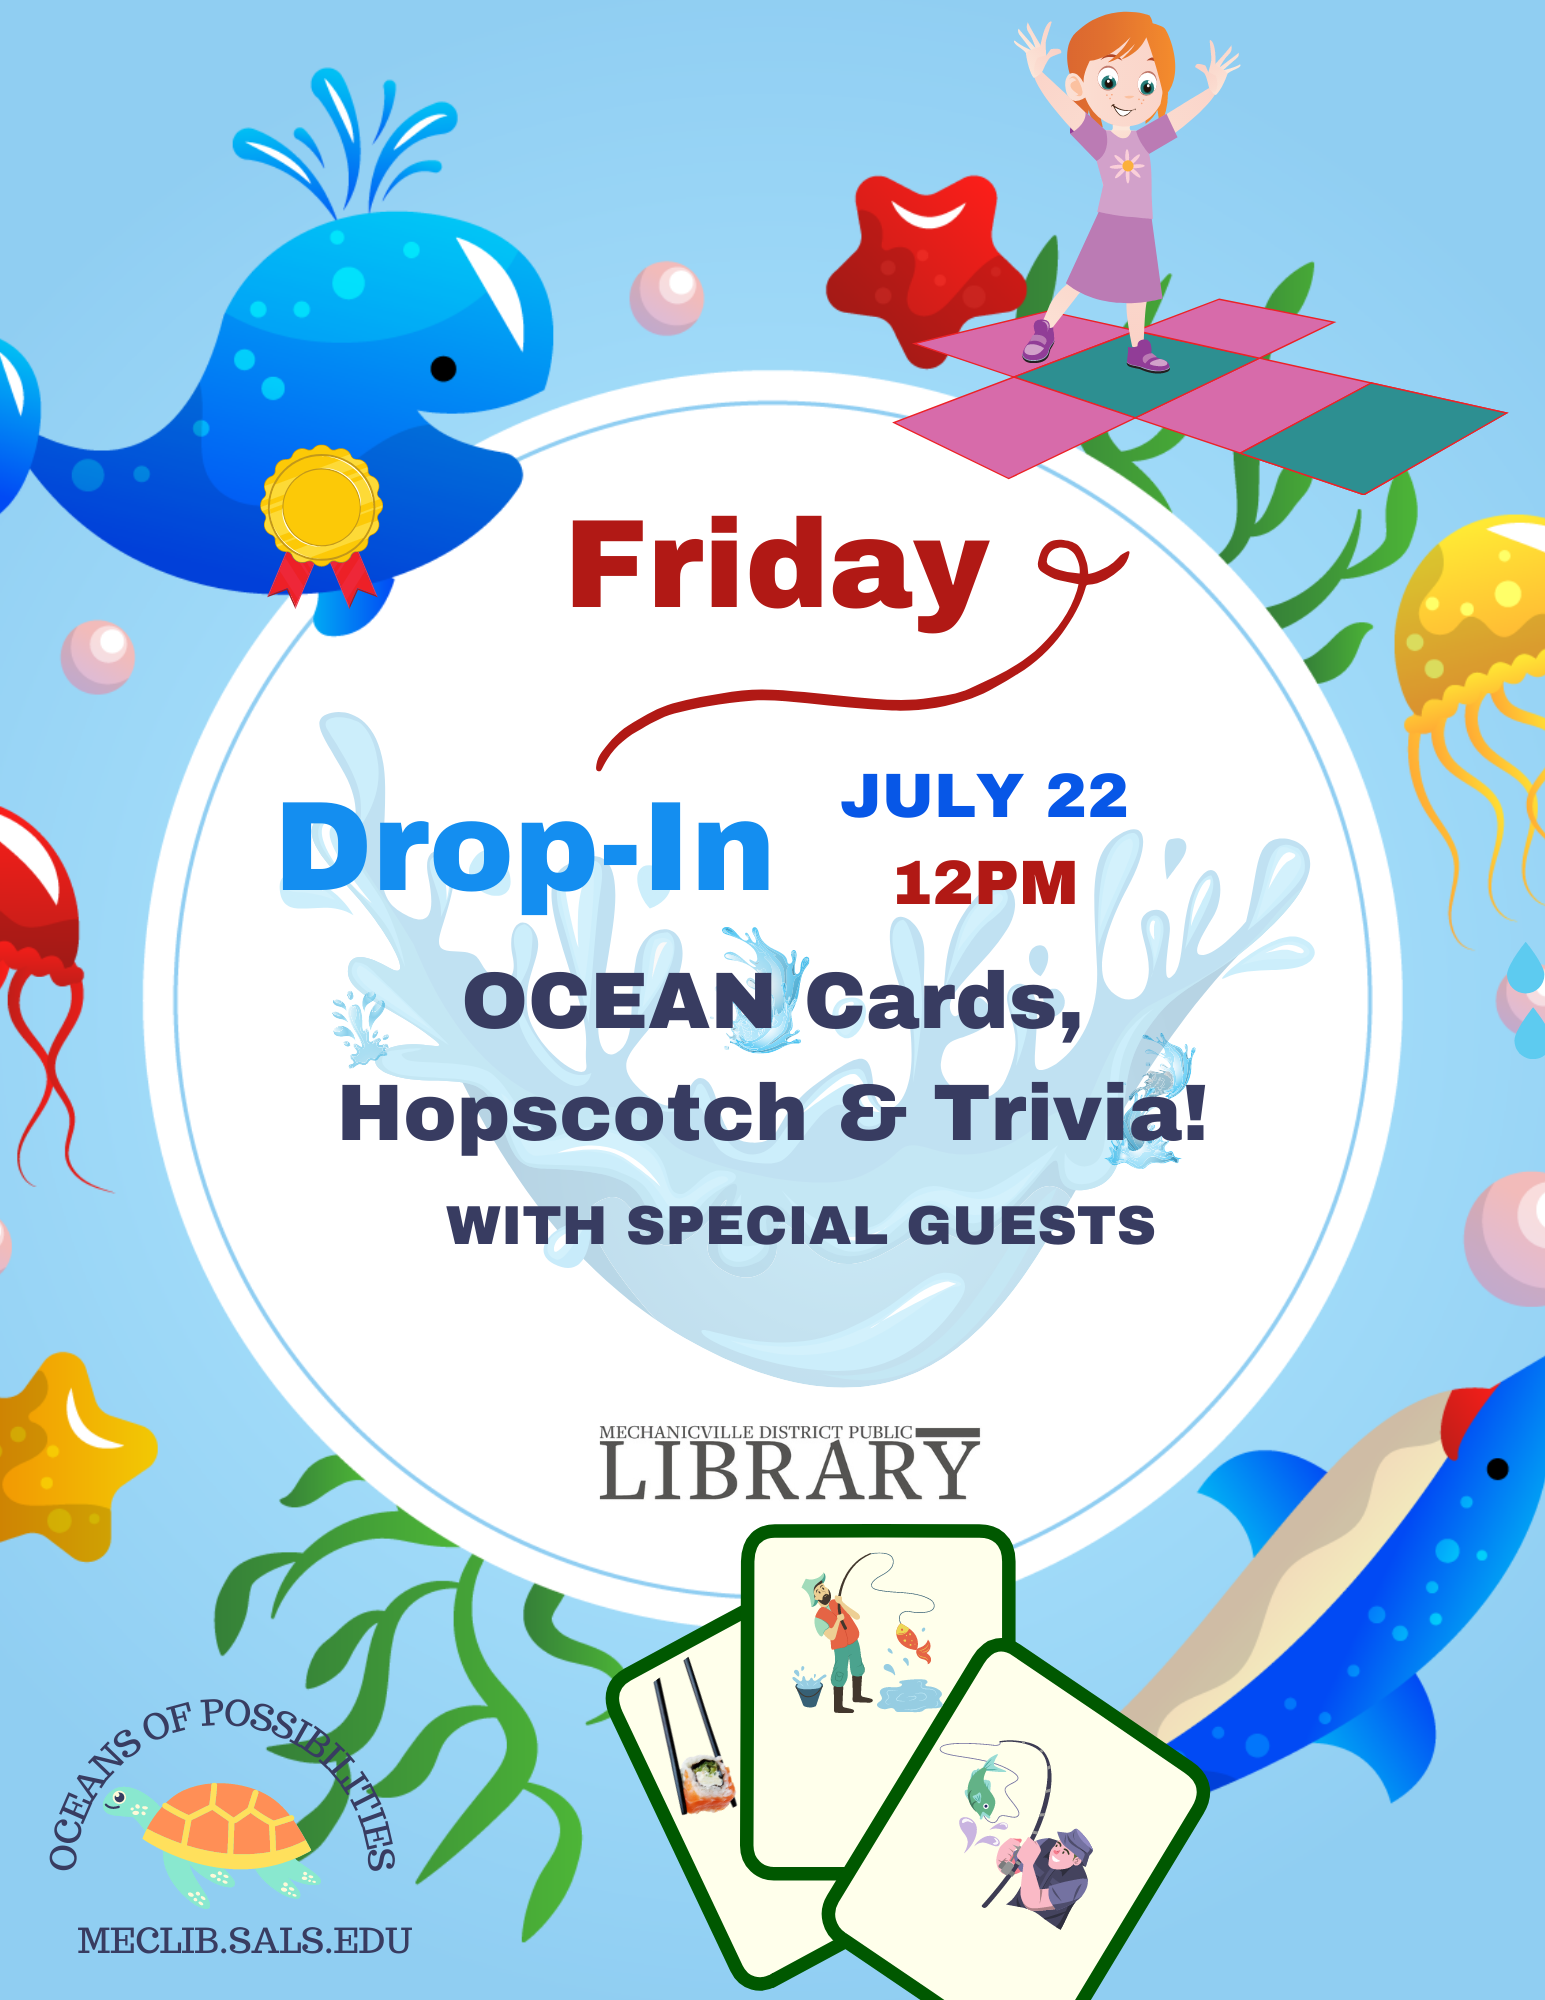 Ocean Card, Hopscotch & Trivia Games - Register Now!